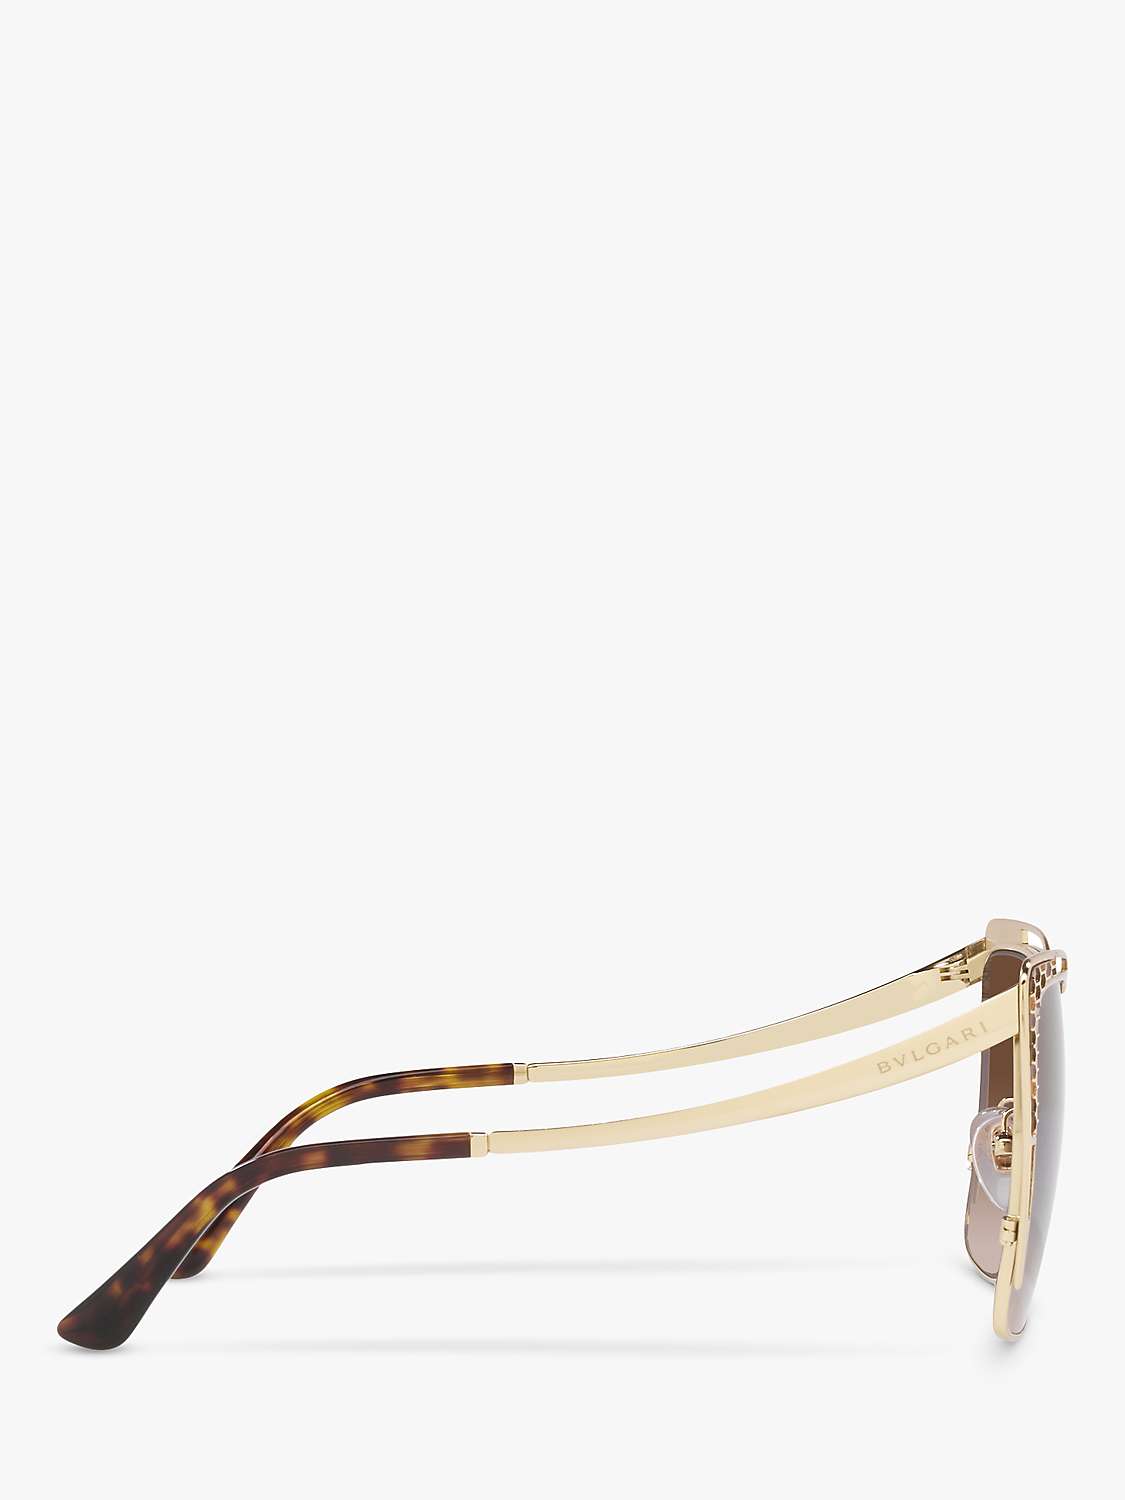 Buy BVLGARI BV6179 Women's Butterfly Sunglasses, Gold/Brown Gradient Online at johnlewis.com